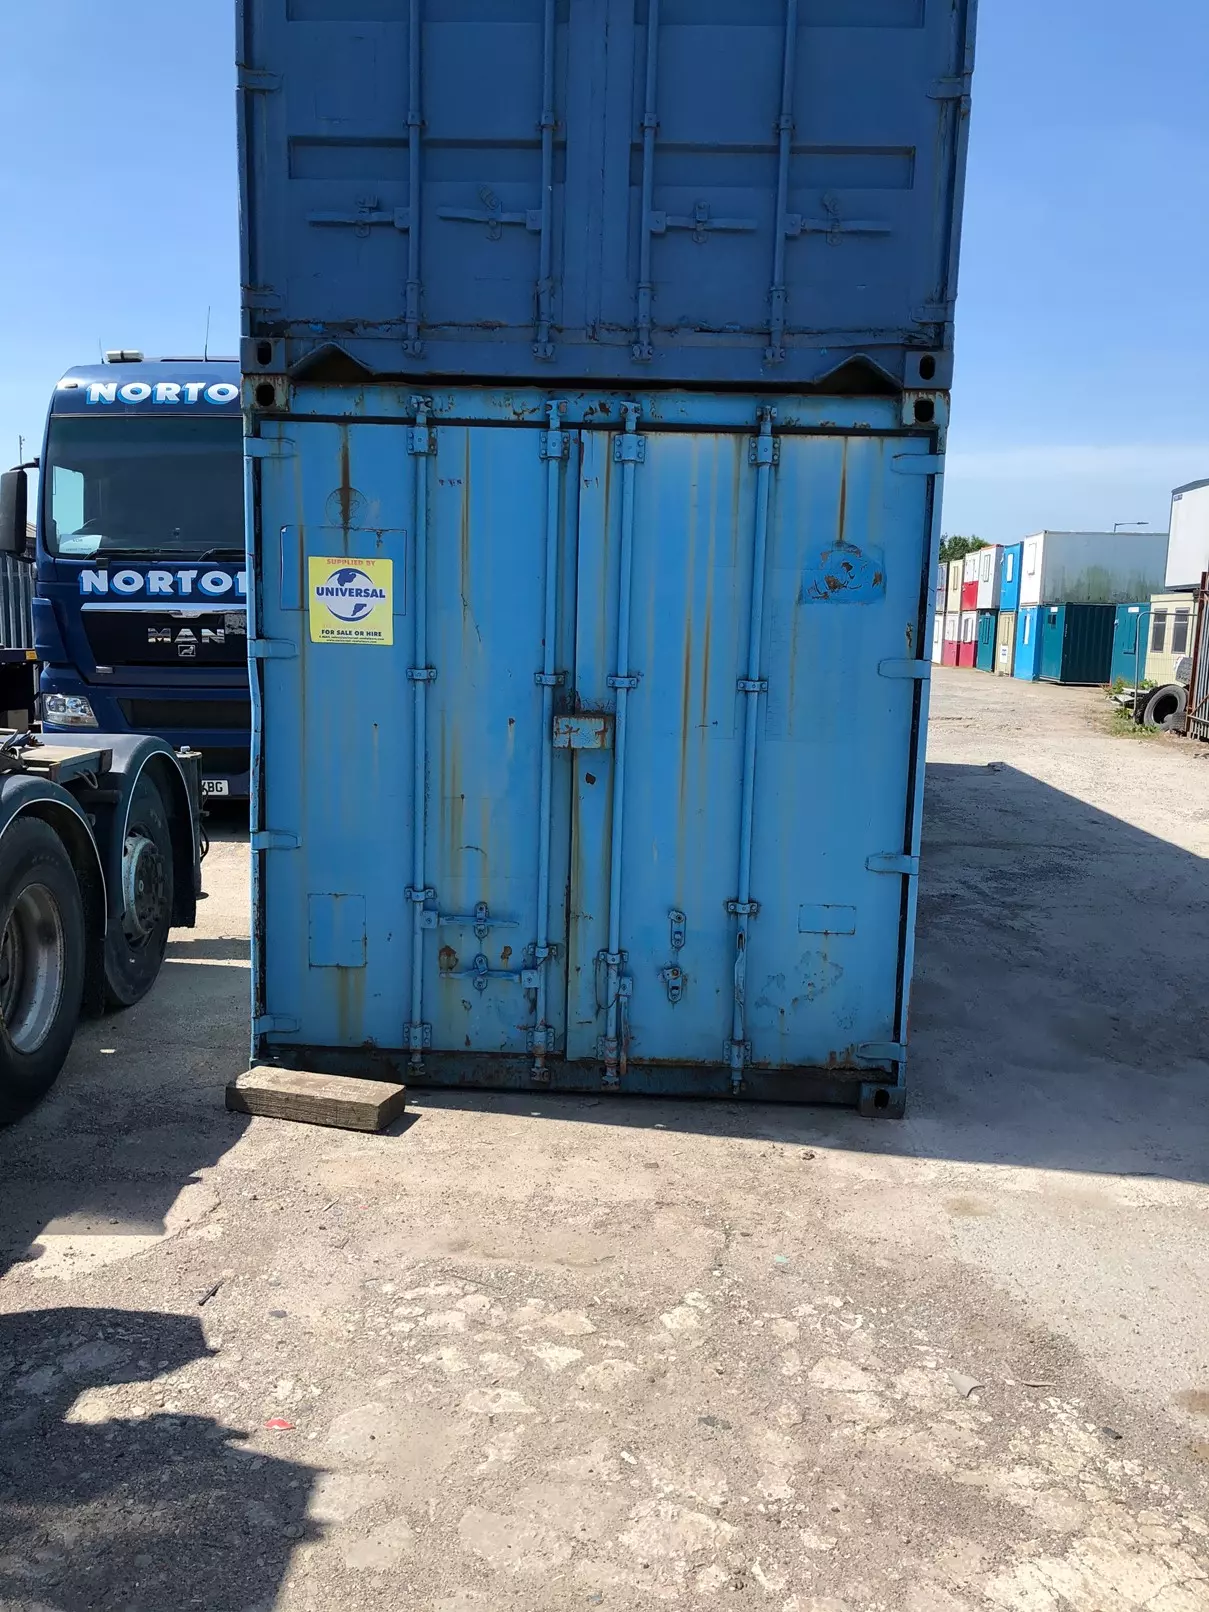 Ref: Container262 40FT WIND & WATERTIGHT £2,200 +VAT